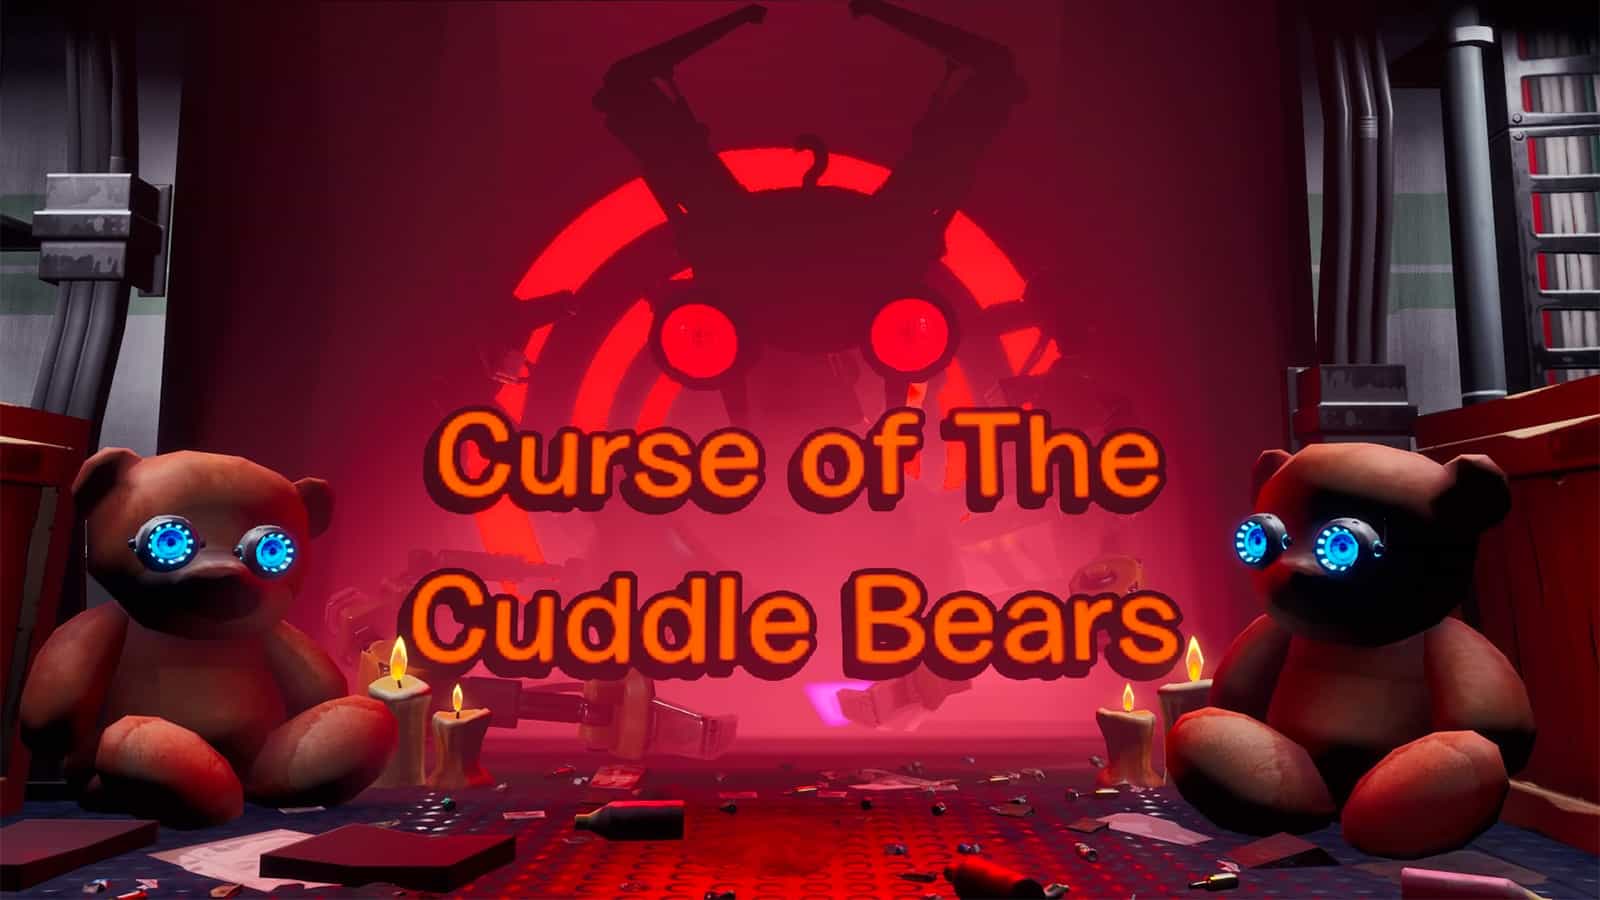 Fortnite Curse of the Cuddle Bears, a Deathrun code map